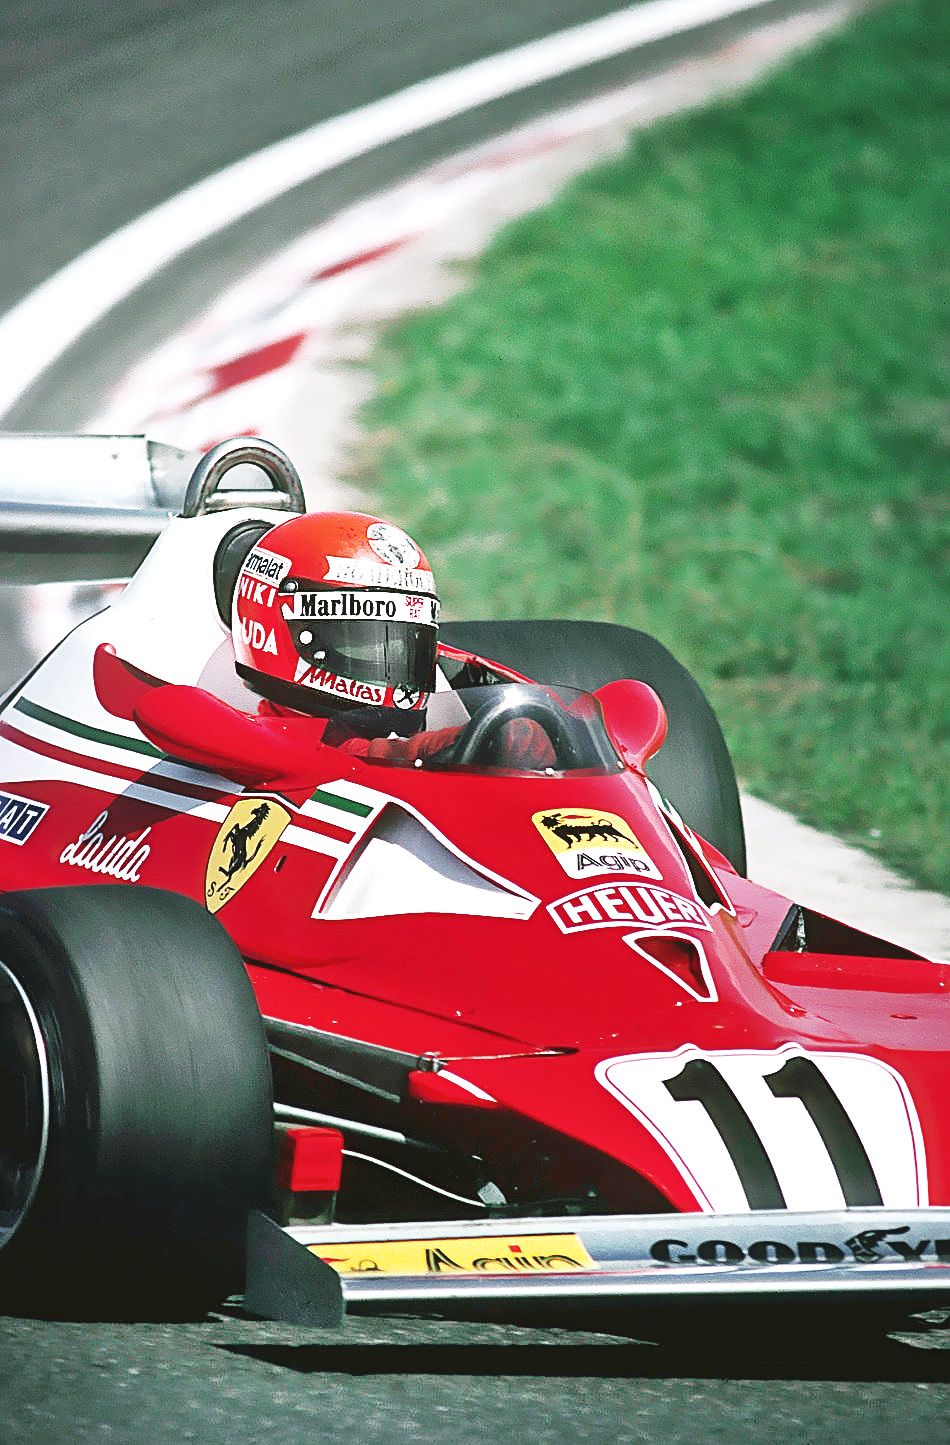 F1 World Champion Niki Lauda On His Ferrari 312t Click The